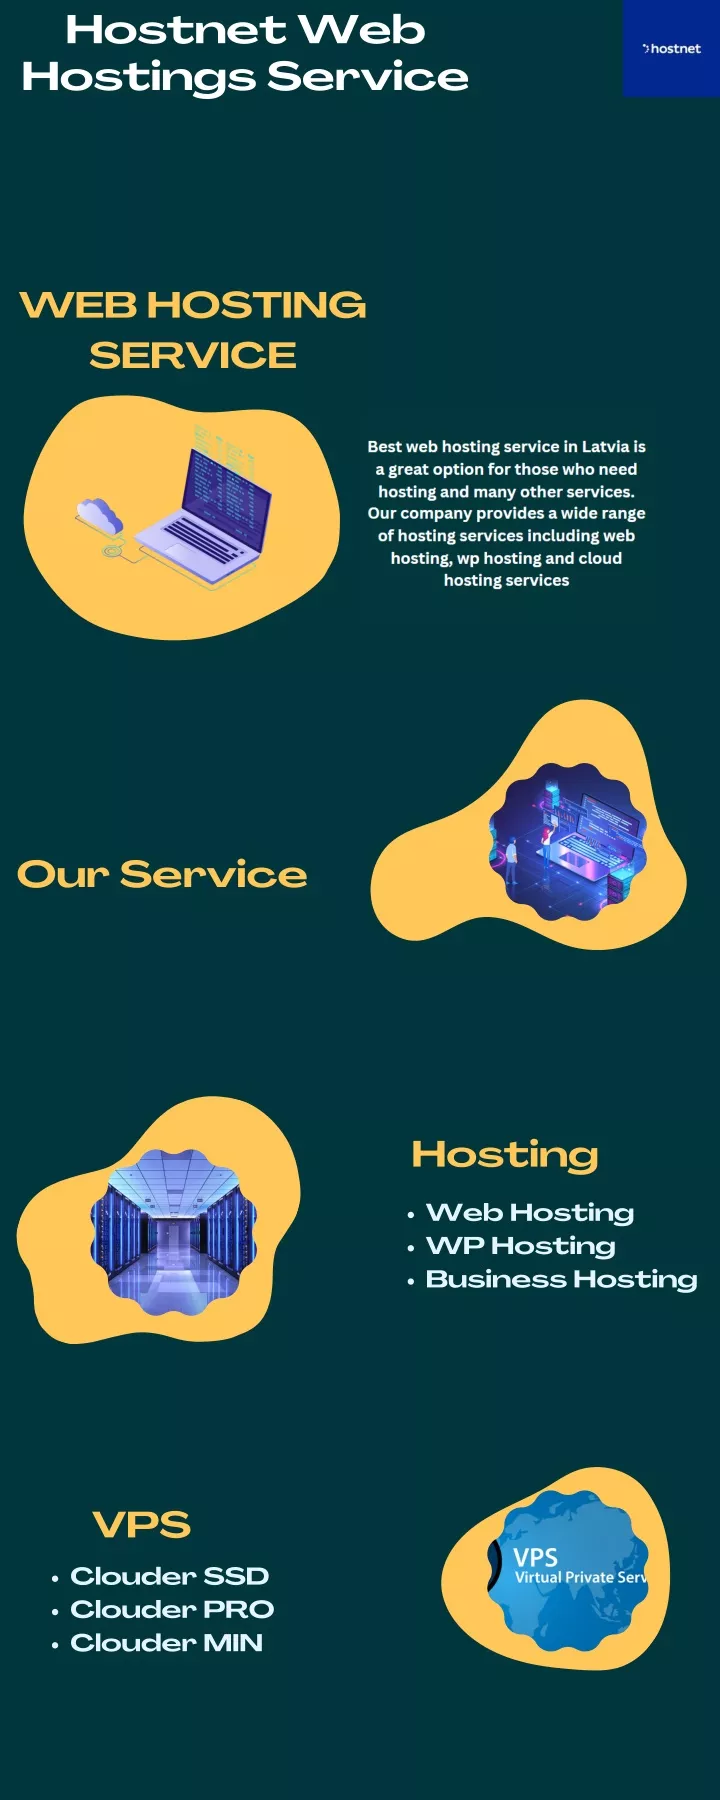 hostnet web hostings service